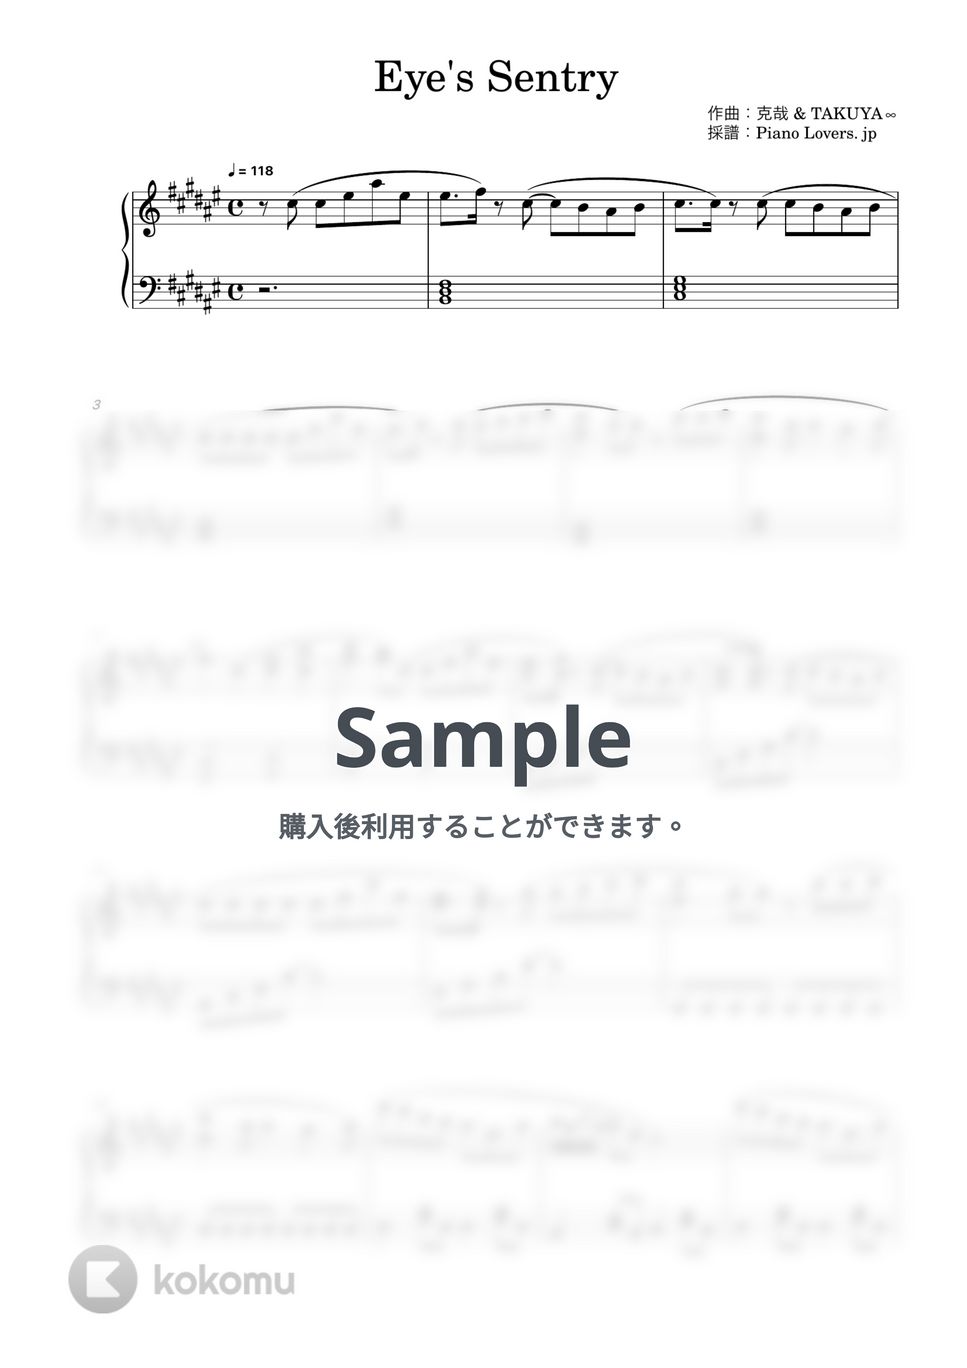 UVERworld - Eye's Sentry (青の祓魔師(青のエクソシスト)) by Piano Lovers. jp